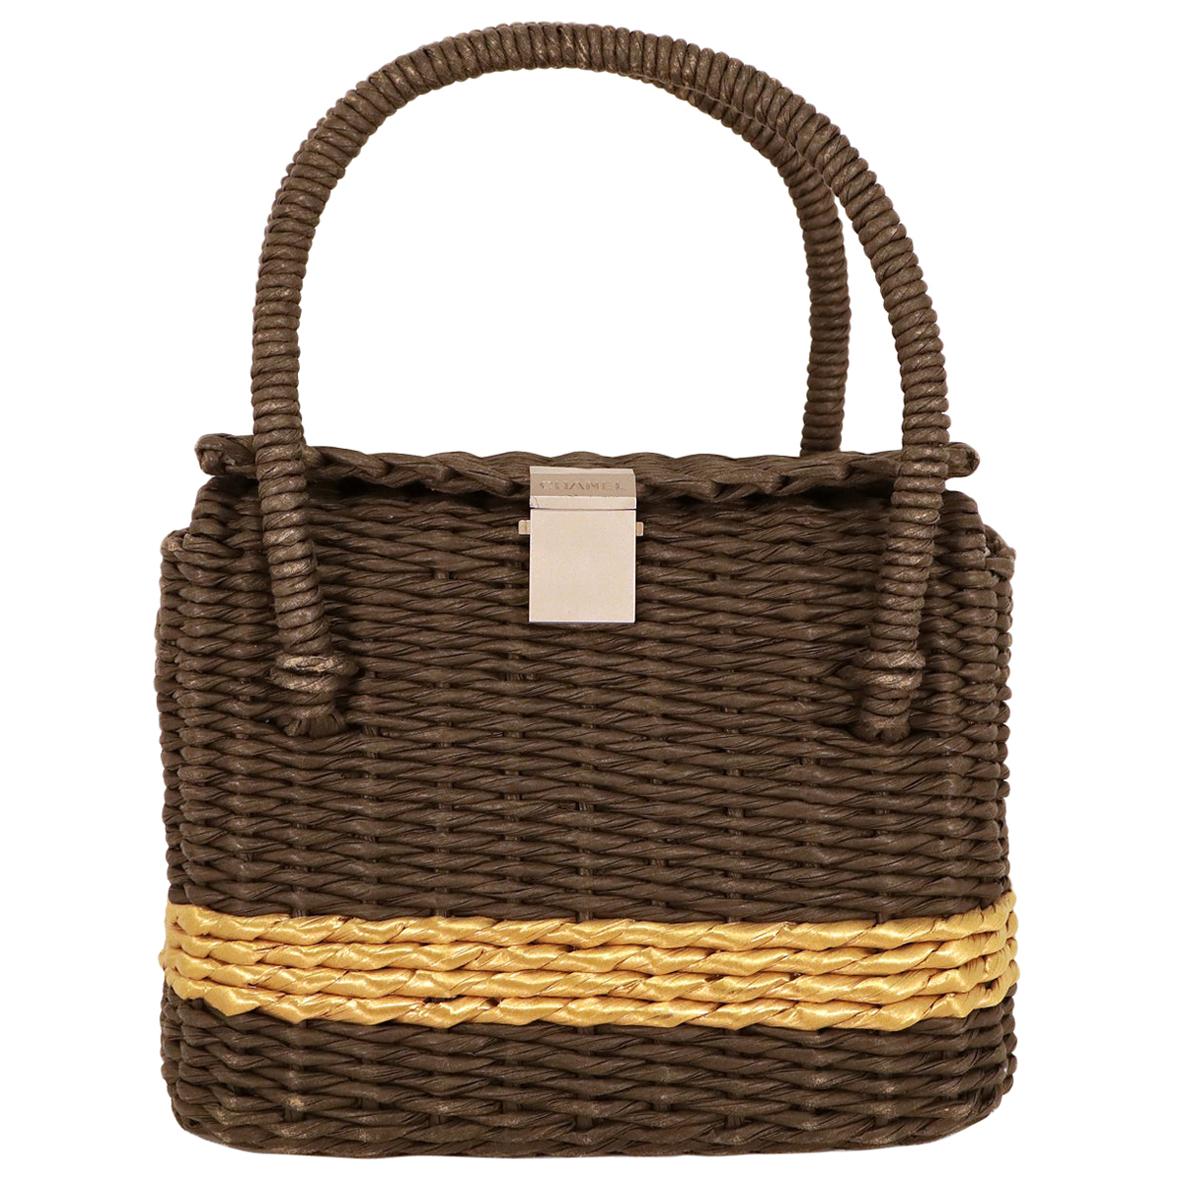 Chanel Black and Gold Wicker Basket Bag 